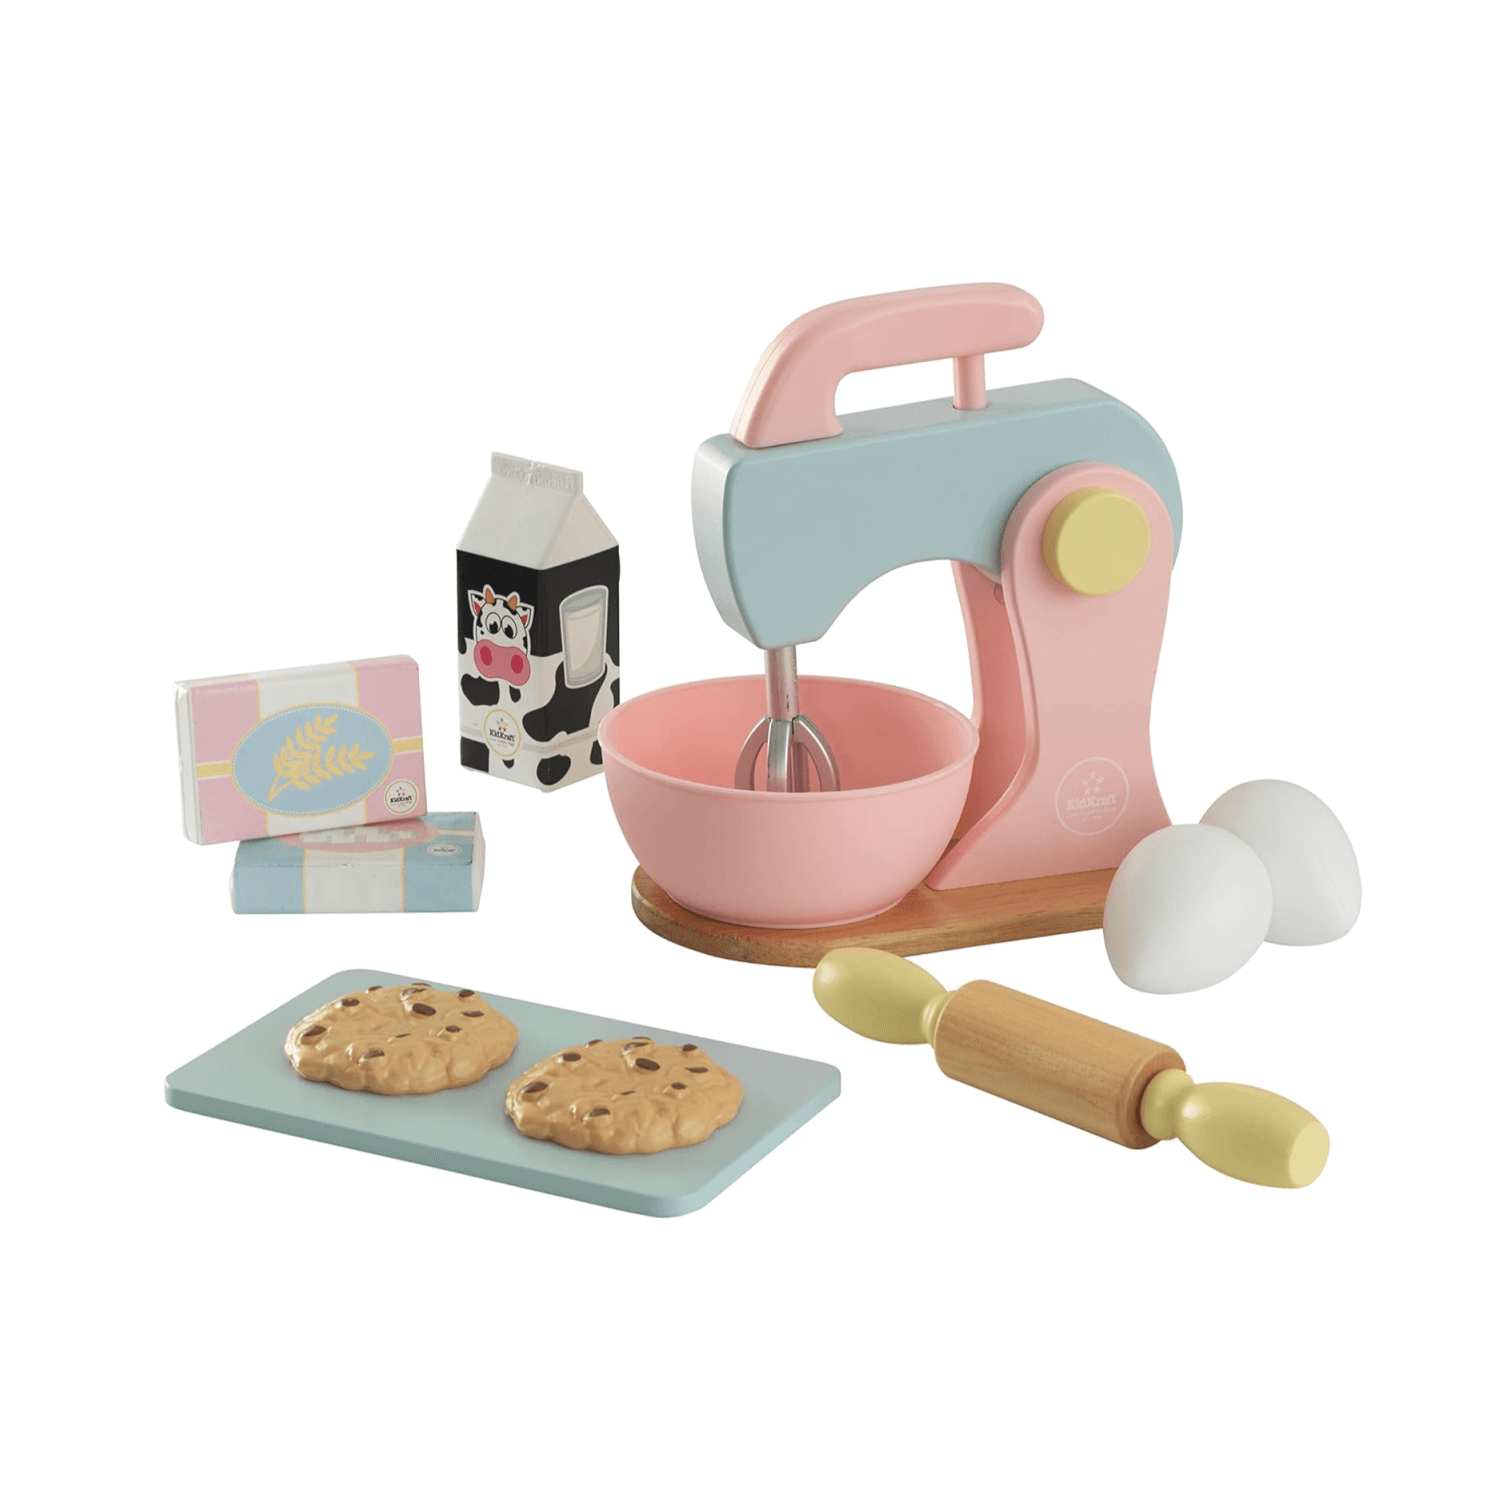 Montessori KidKraft Baking Set Toys Pastel